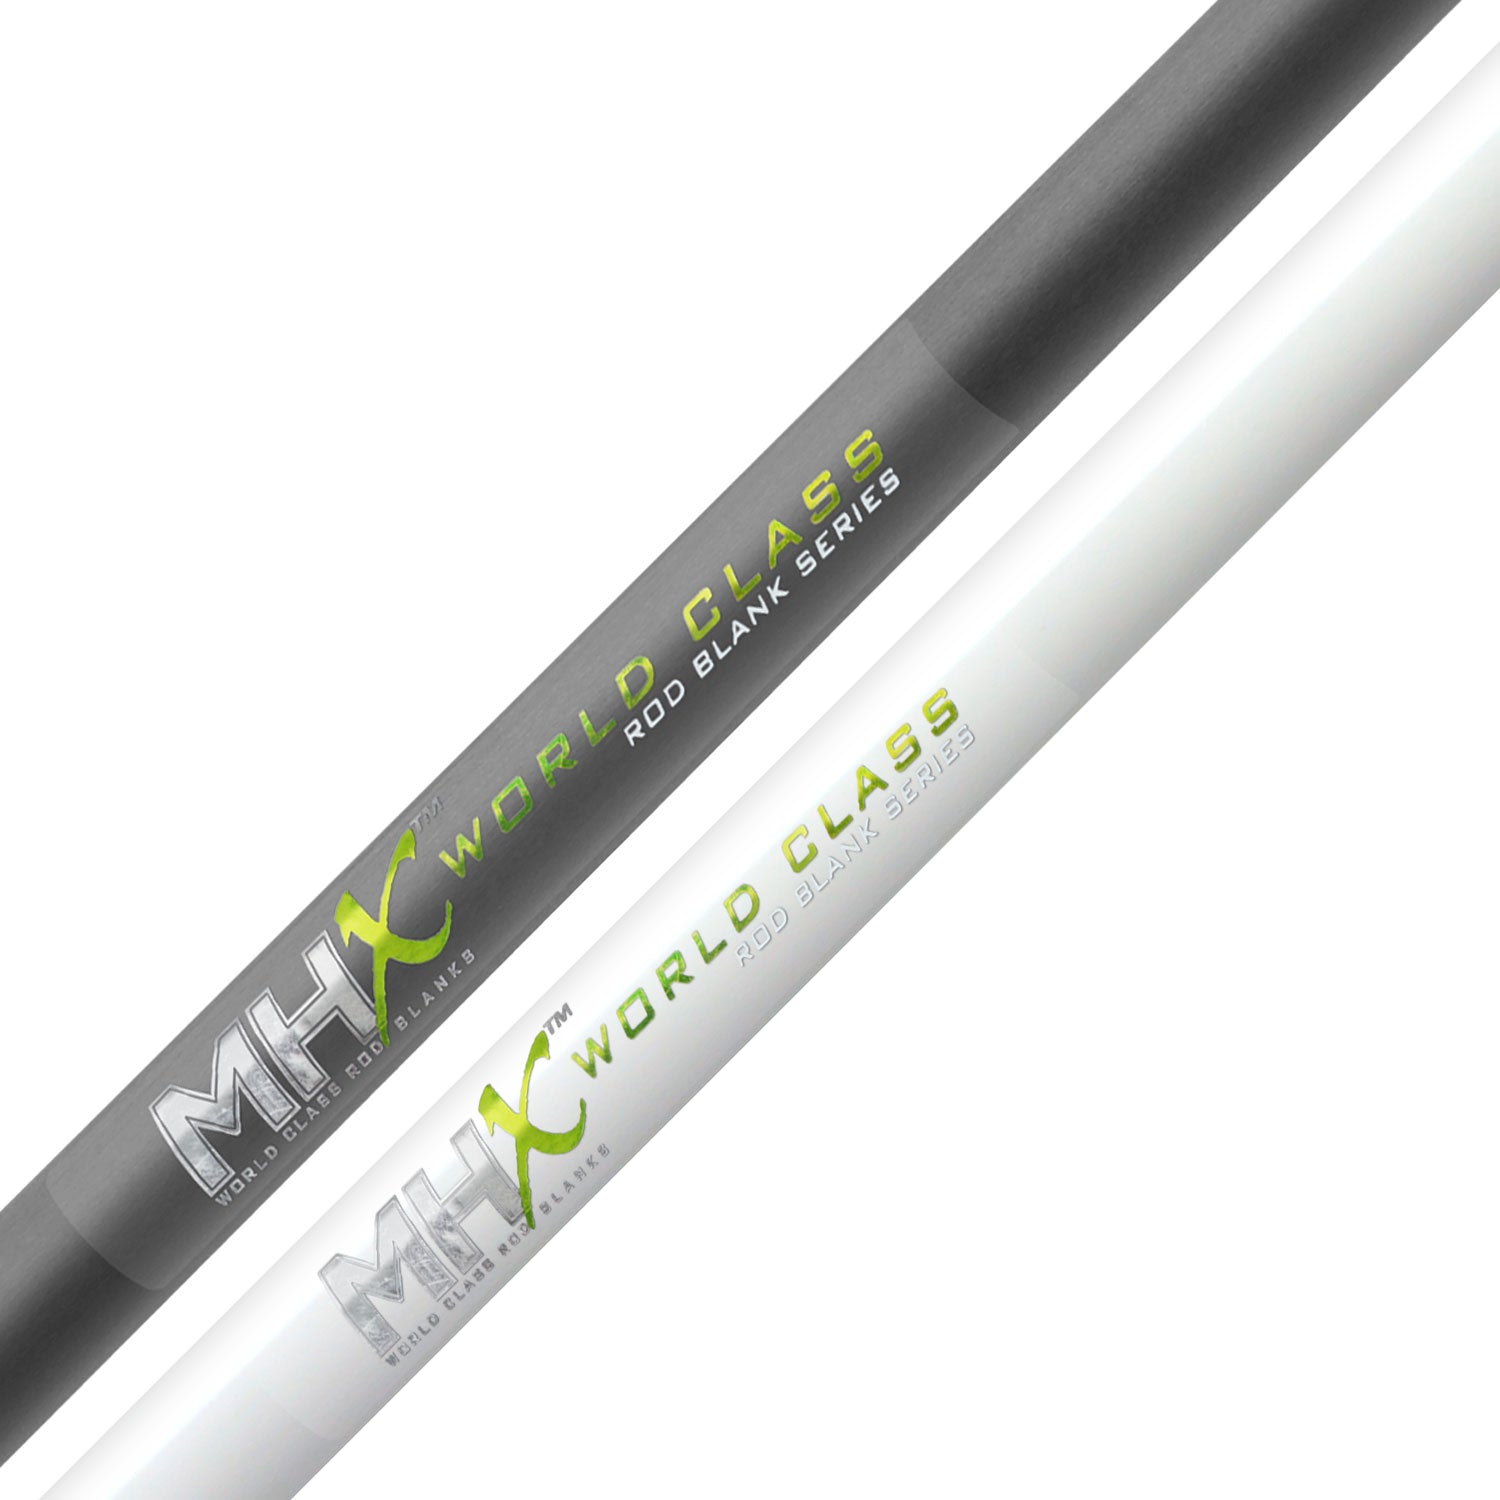 MHX 7'6" Med-Heavy Flipping Stick Rod Blank - FS904